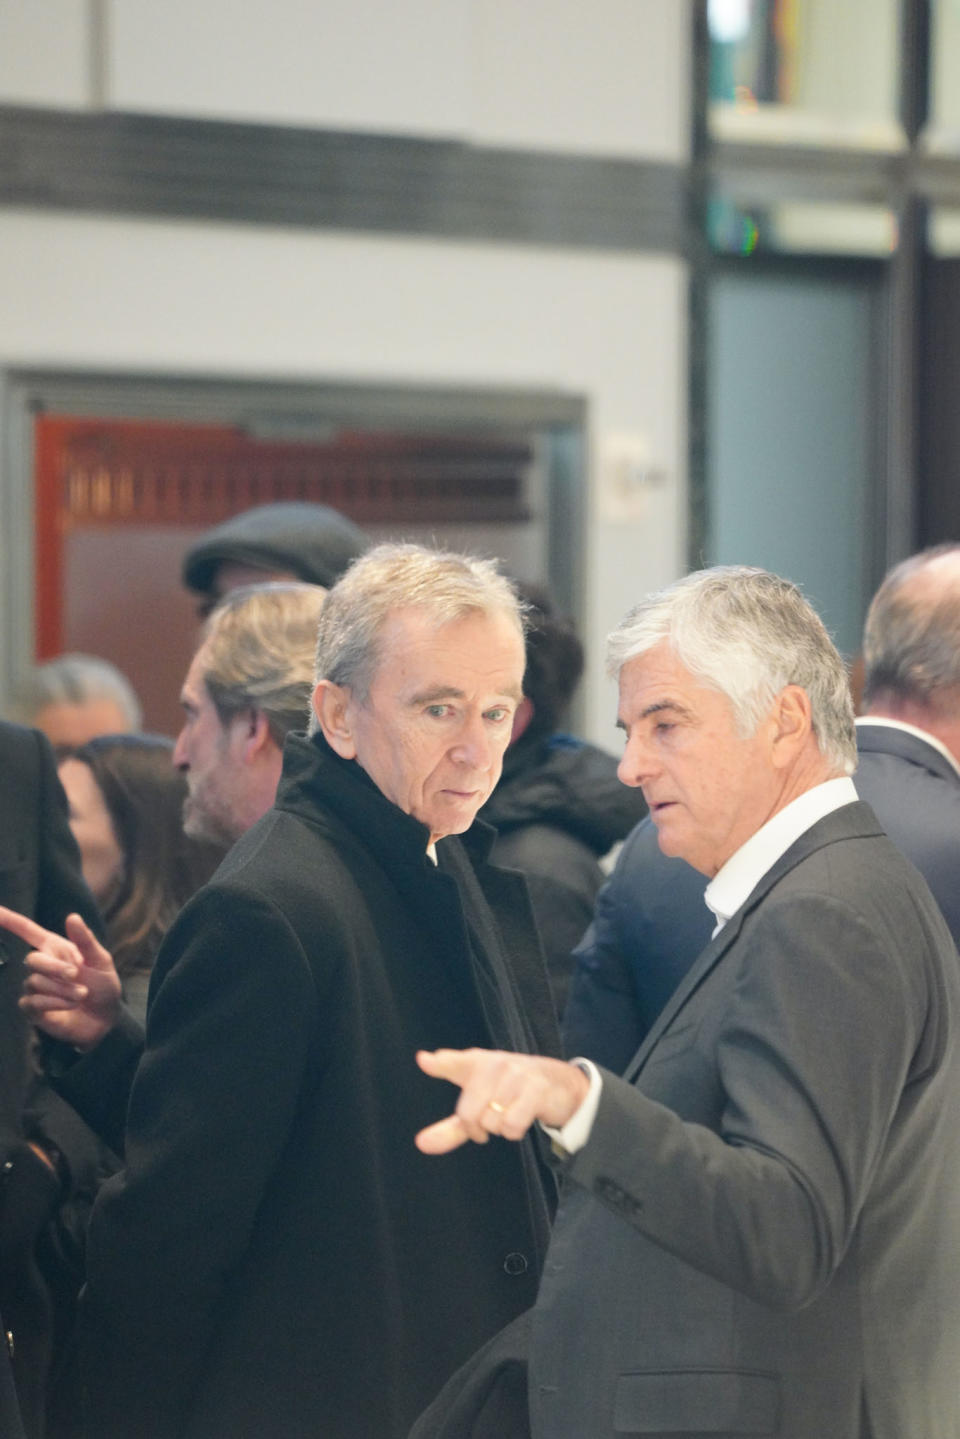 Bernard Arnault with LVMH group managing director Antonio Belloni